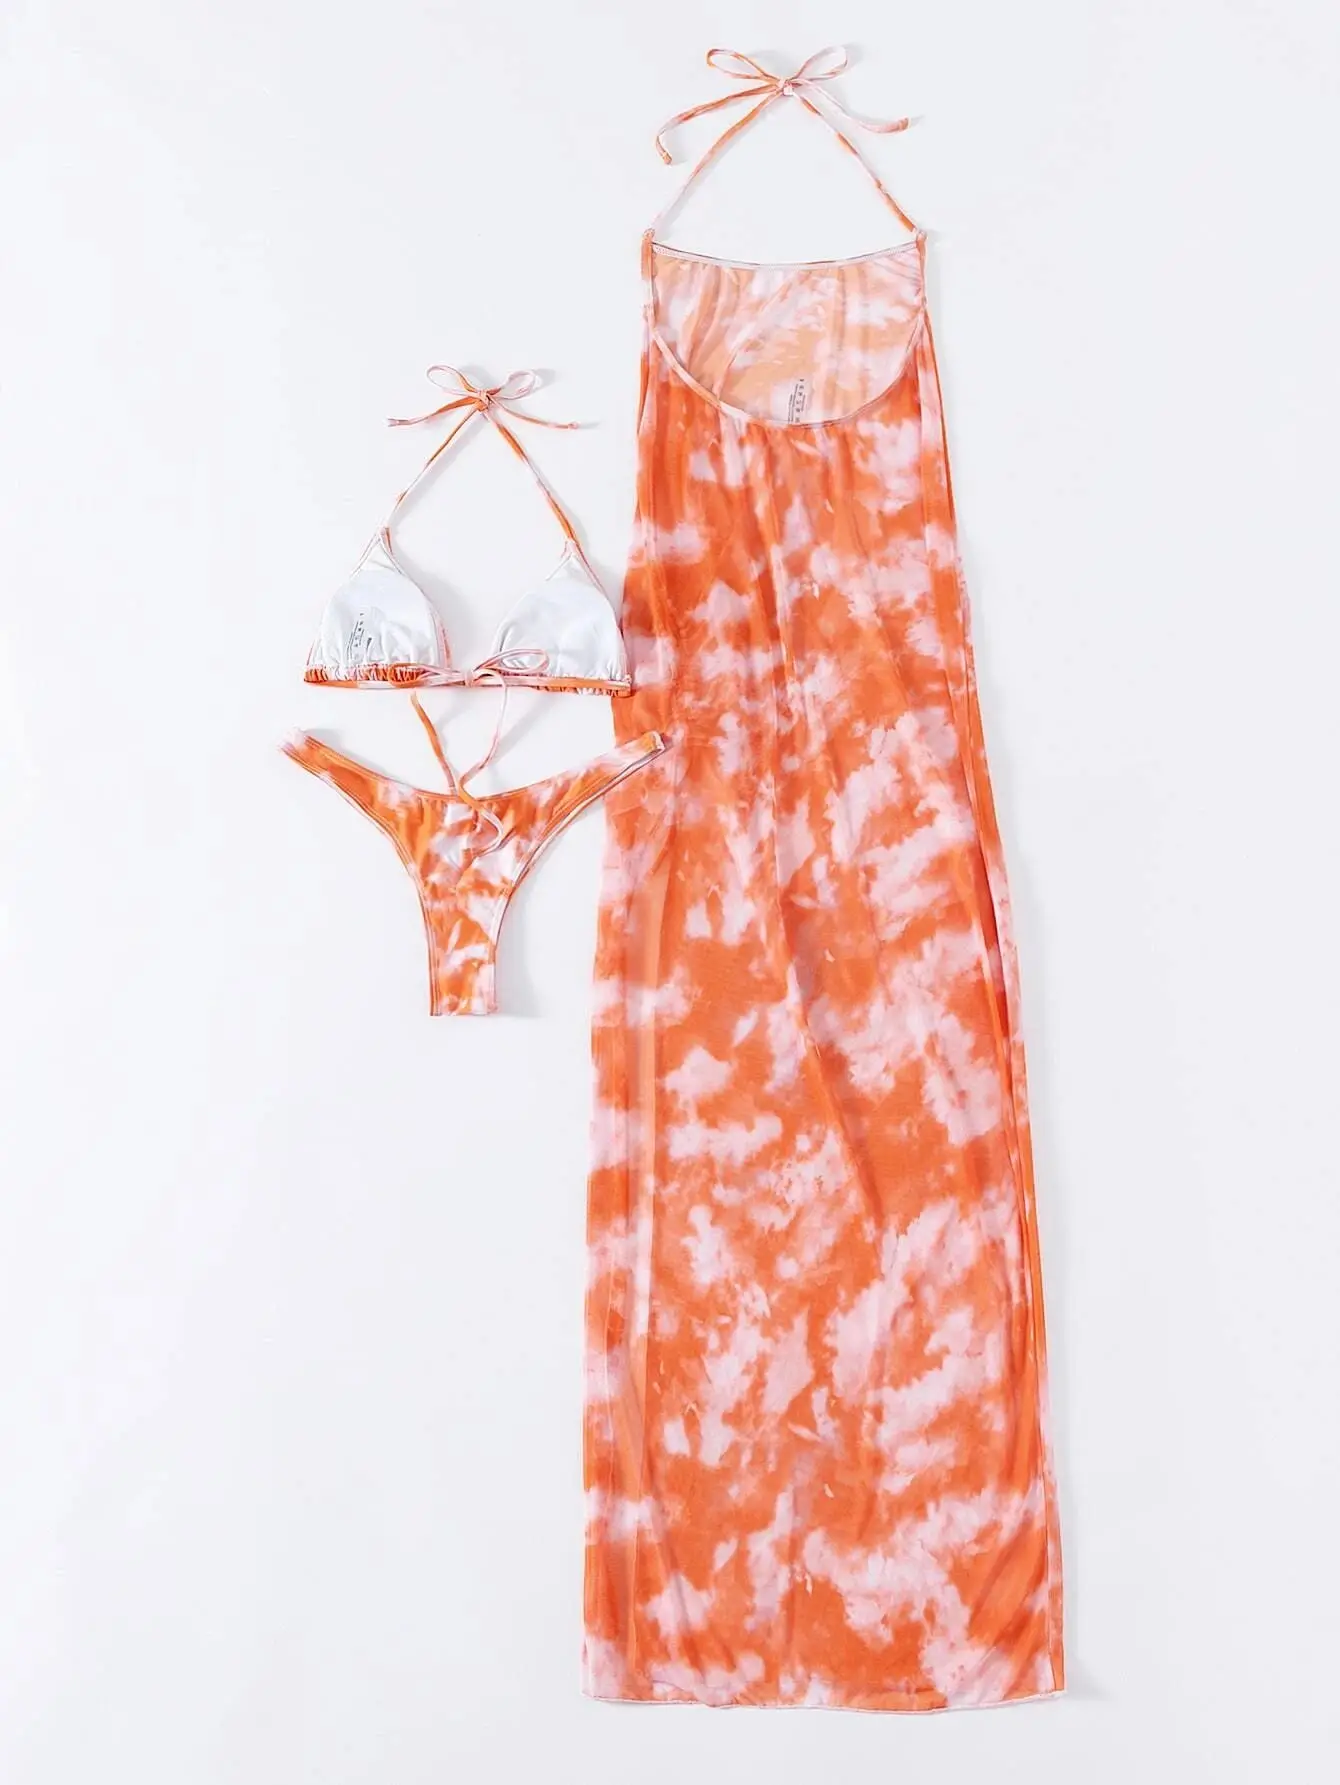 3 Pack Tie Dye Triangle Bikini Set Swimsuit Women Cover Up Swimwear Summer Beach Bathing Suit Bikinis bikini set for beach